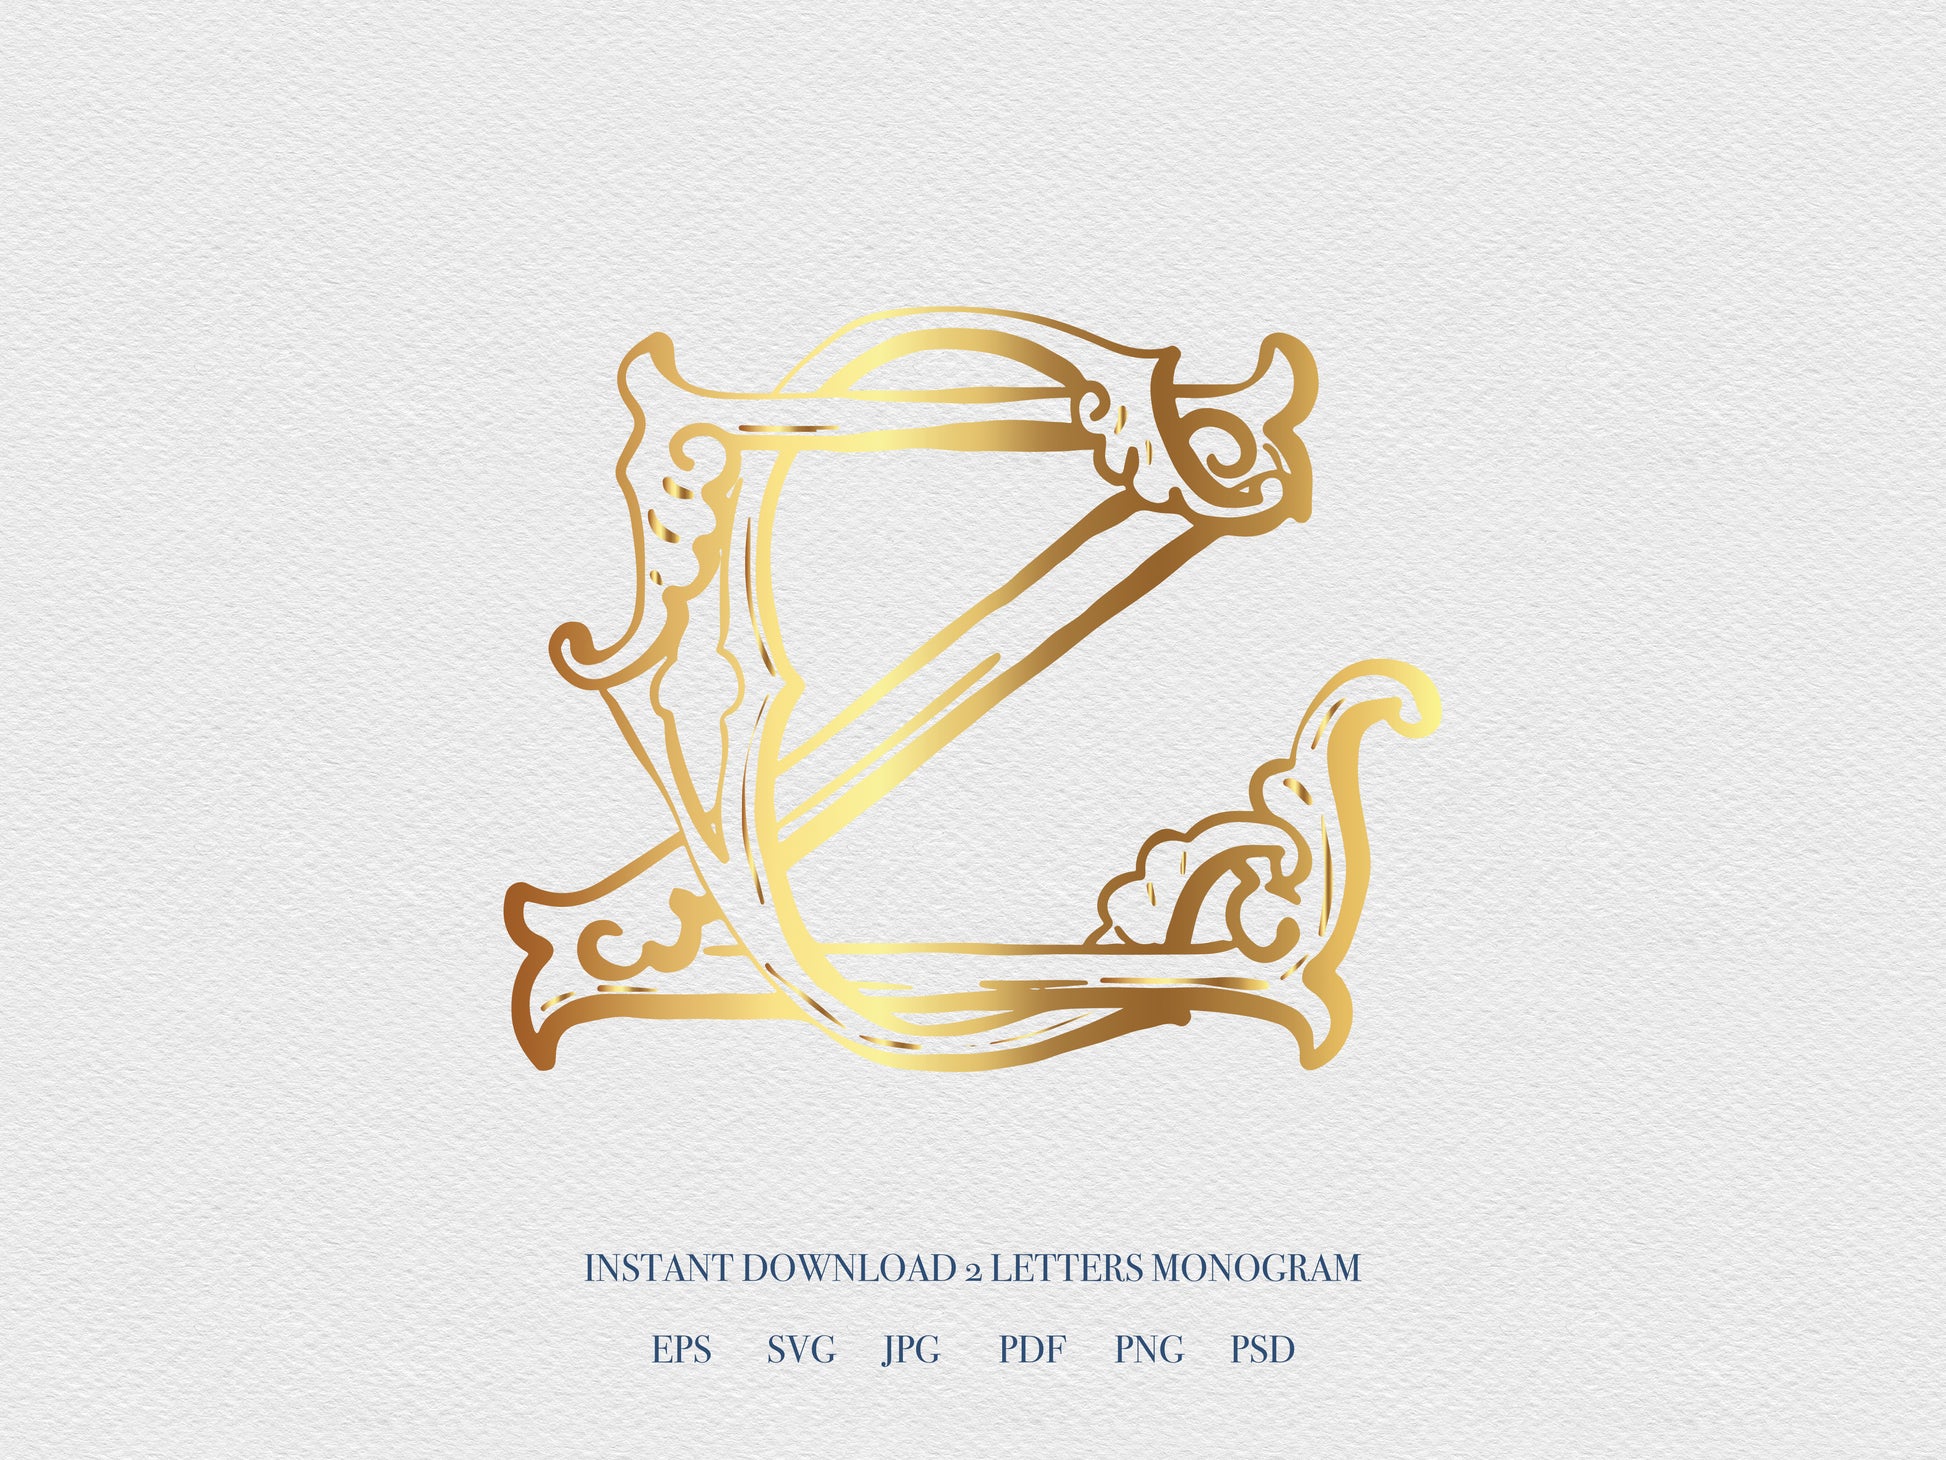 2 Letter Monogram with Letters CZ ZC | Digital Download - Wedding Monogram SVG, Personal Logo, Wedding Logo for Wedding Invitations The Wedding Crest Lab